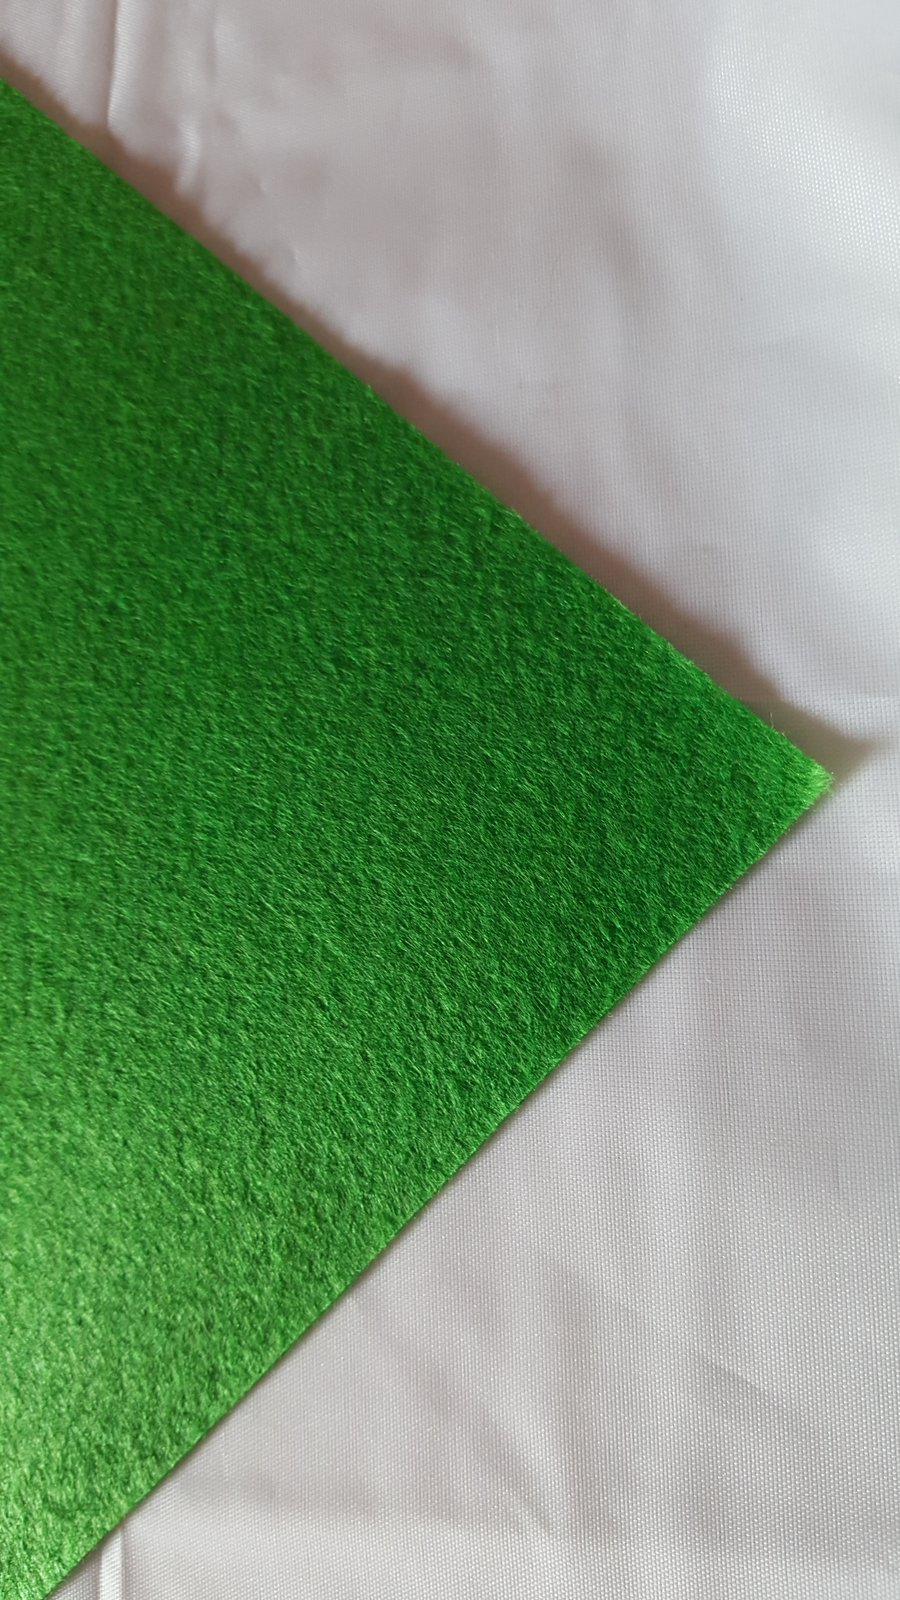 1 x Felt Sheet - Square - 12" (30cm) - Green 